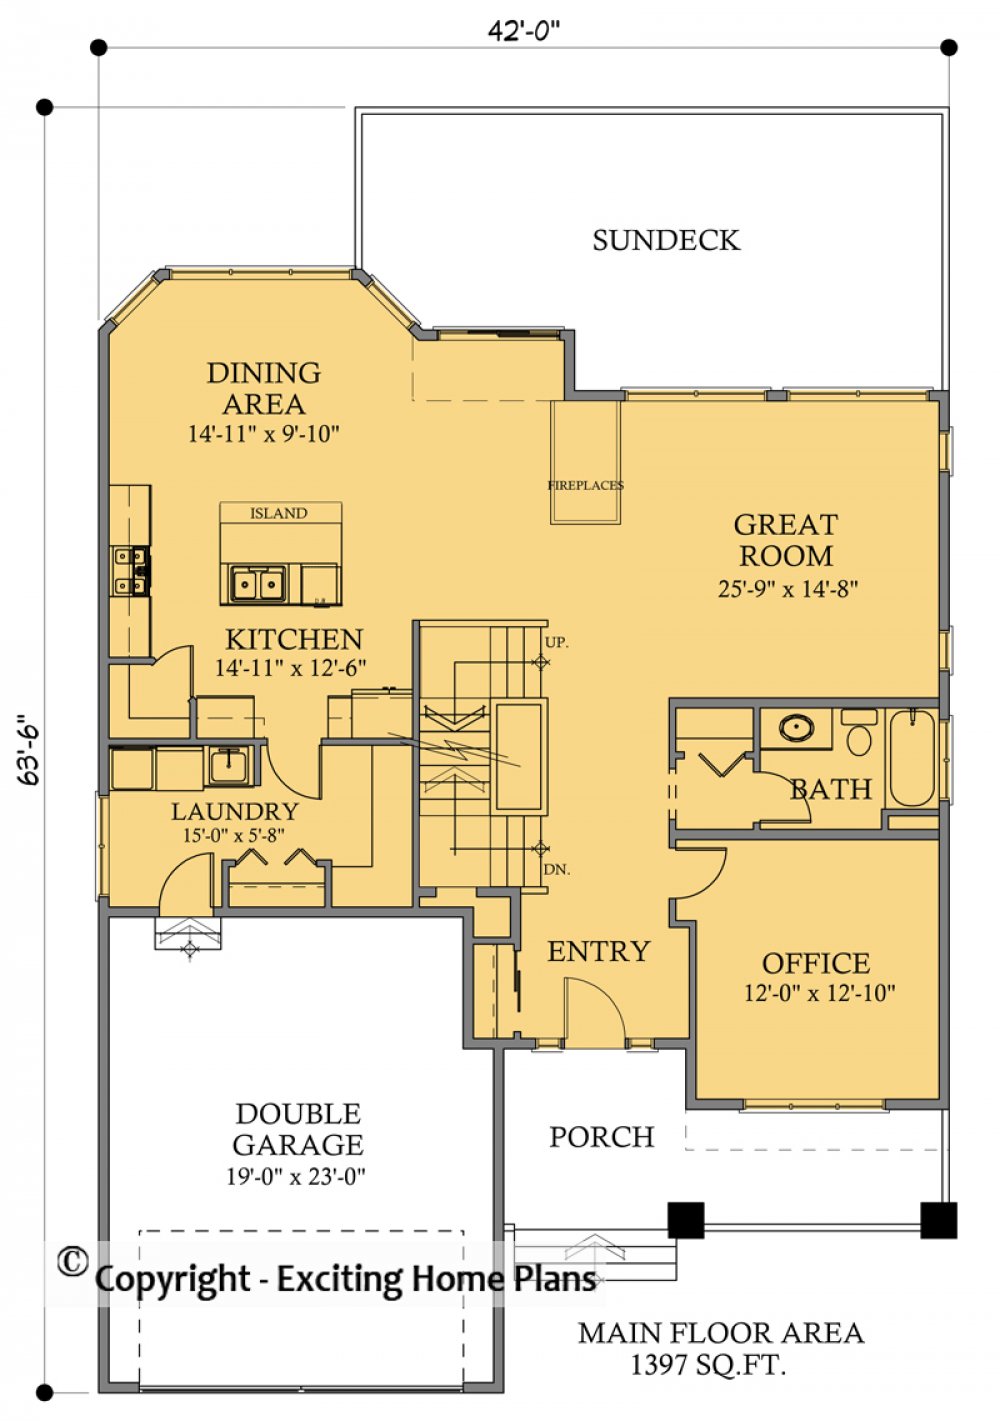 House Plan E1075-11 Main Floor Plan